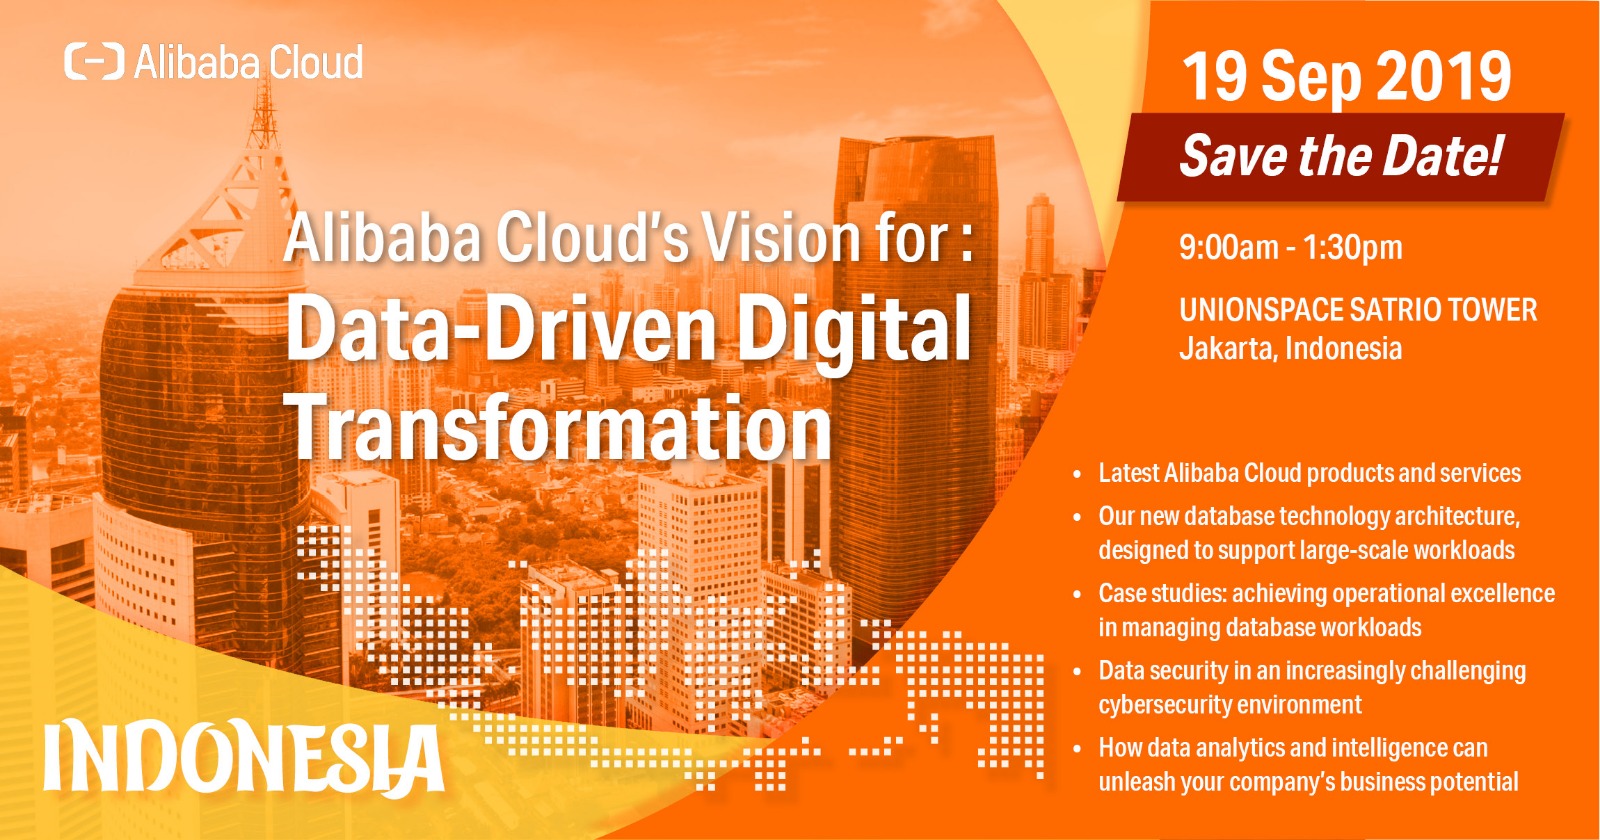 ApsaraChat: Alibaba Cloud's Vision Data-Driven Digital Transformation